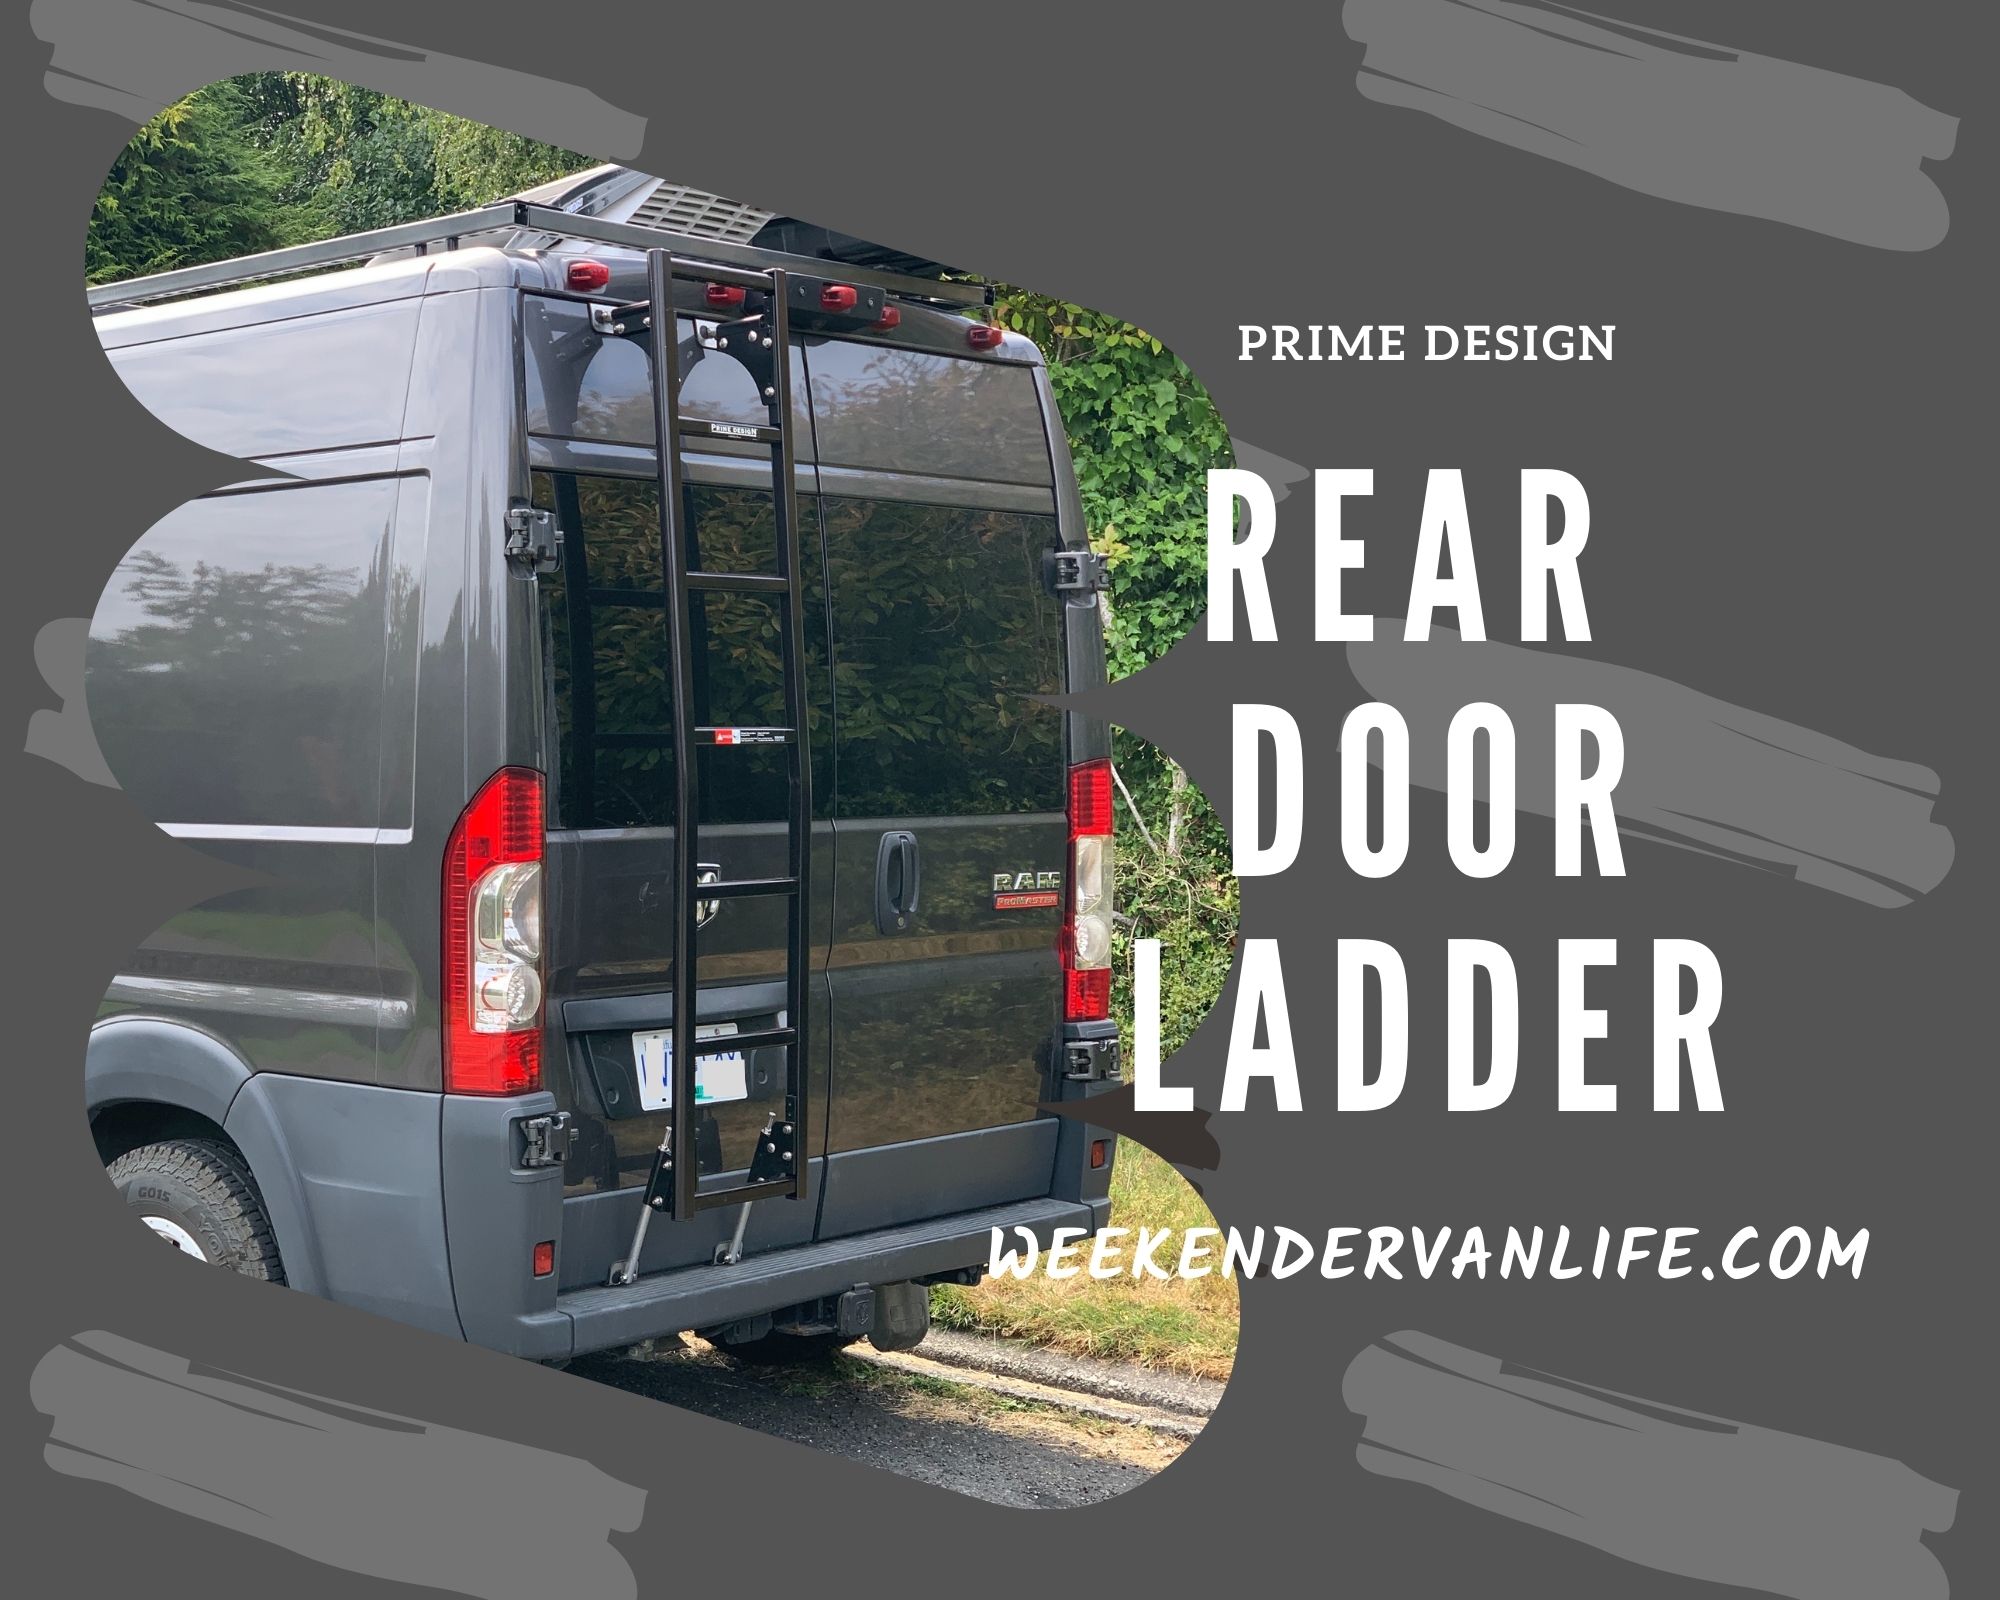 https://weekendervanlife.com/wp-content/uploads/2021/08/Prime-Design-Rear-Door-Ladder-for-Ram-ProMaster.jpg